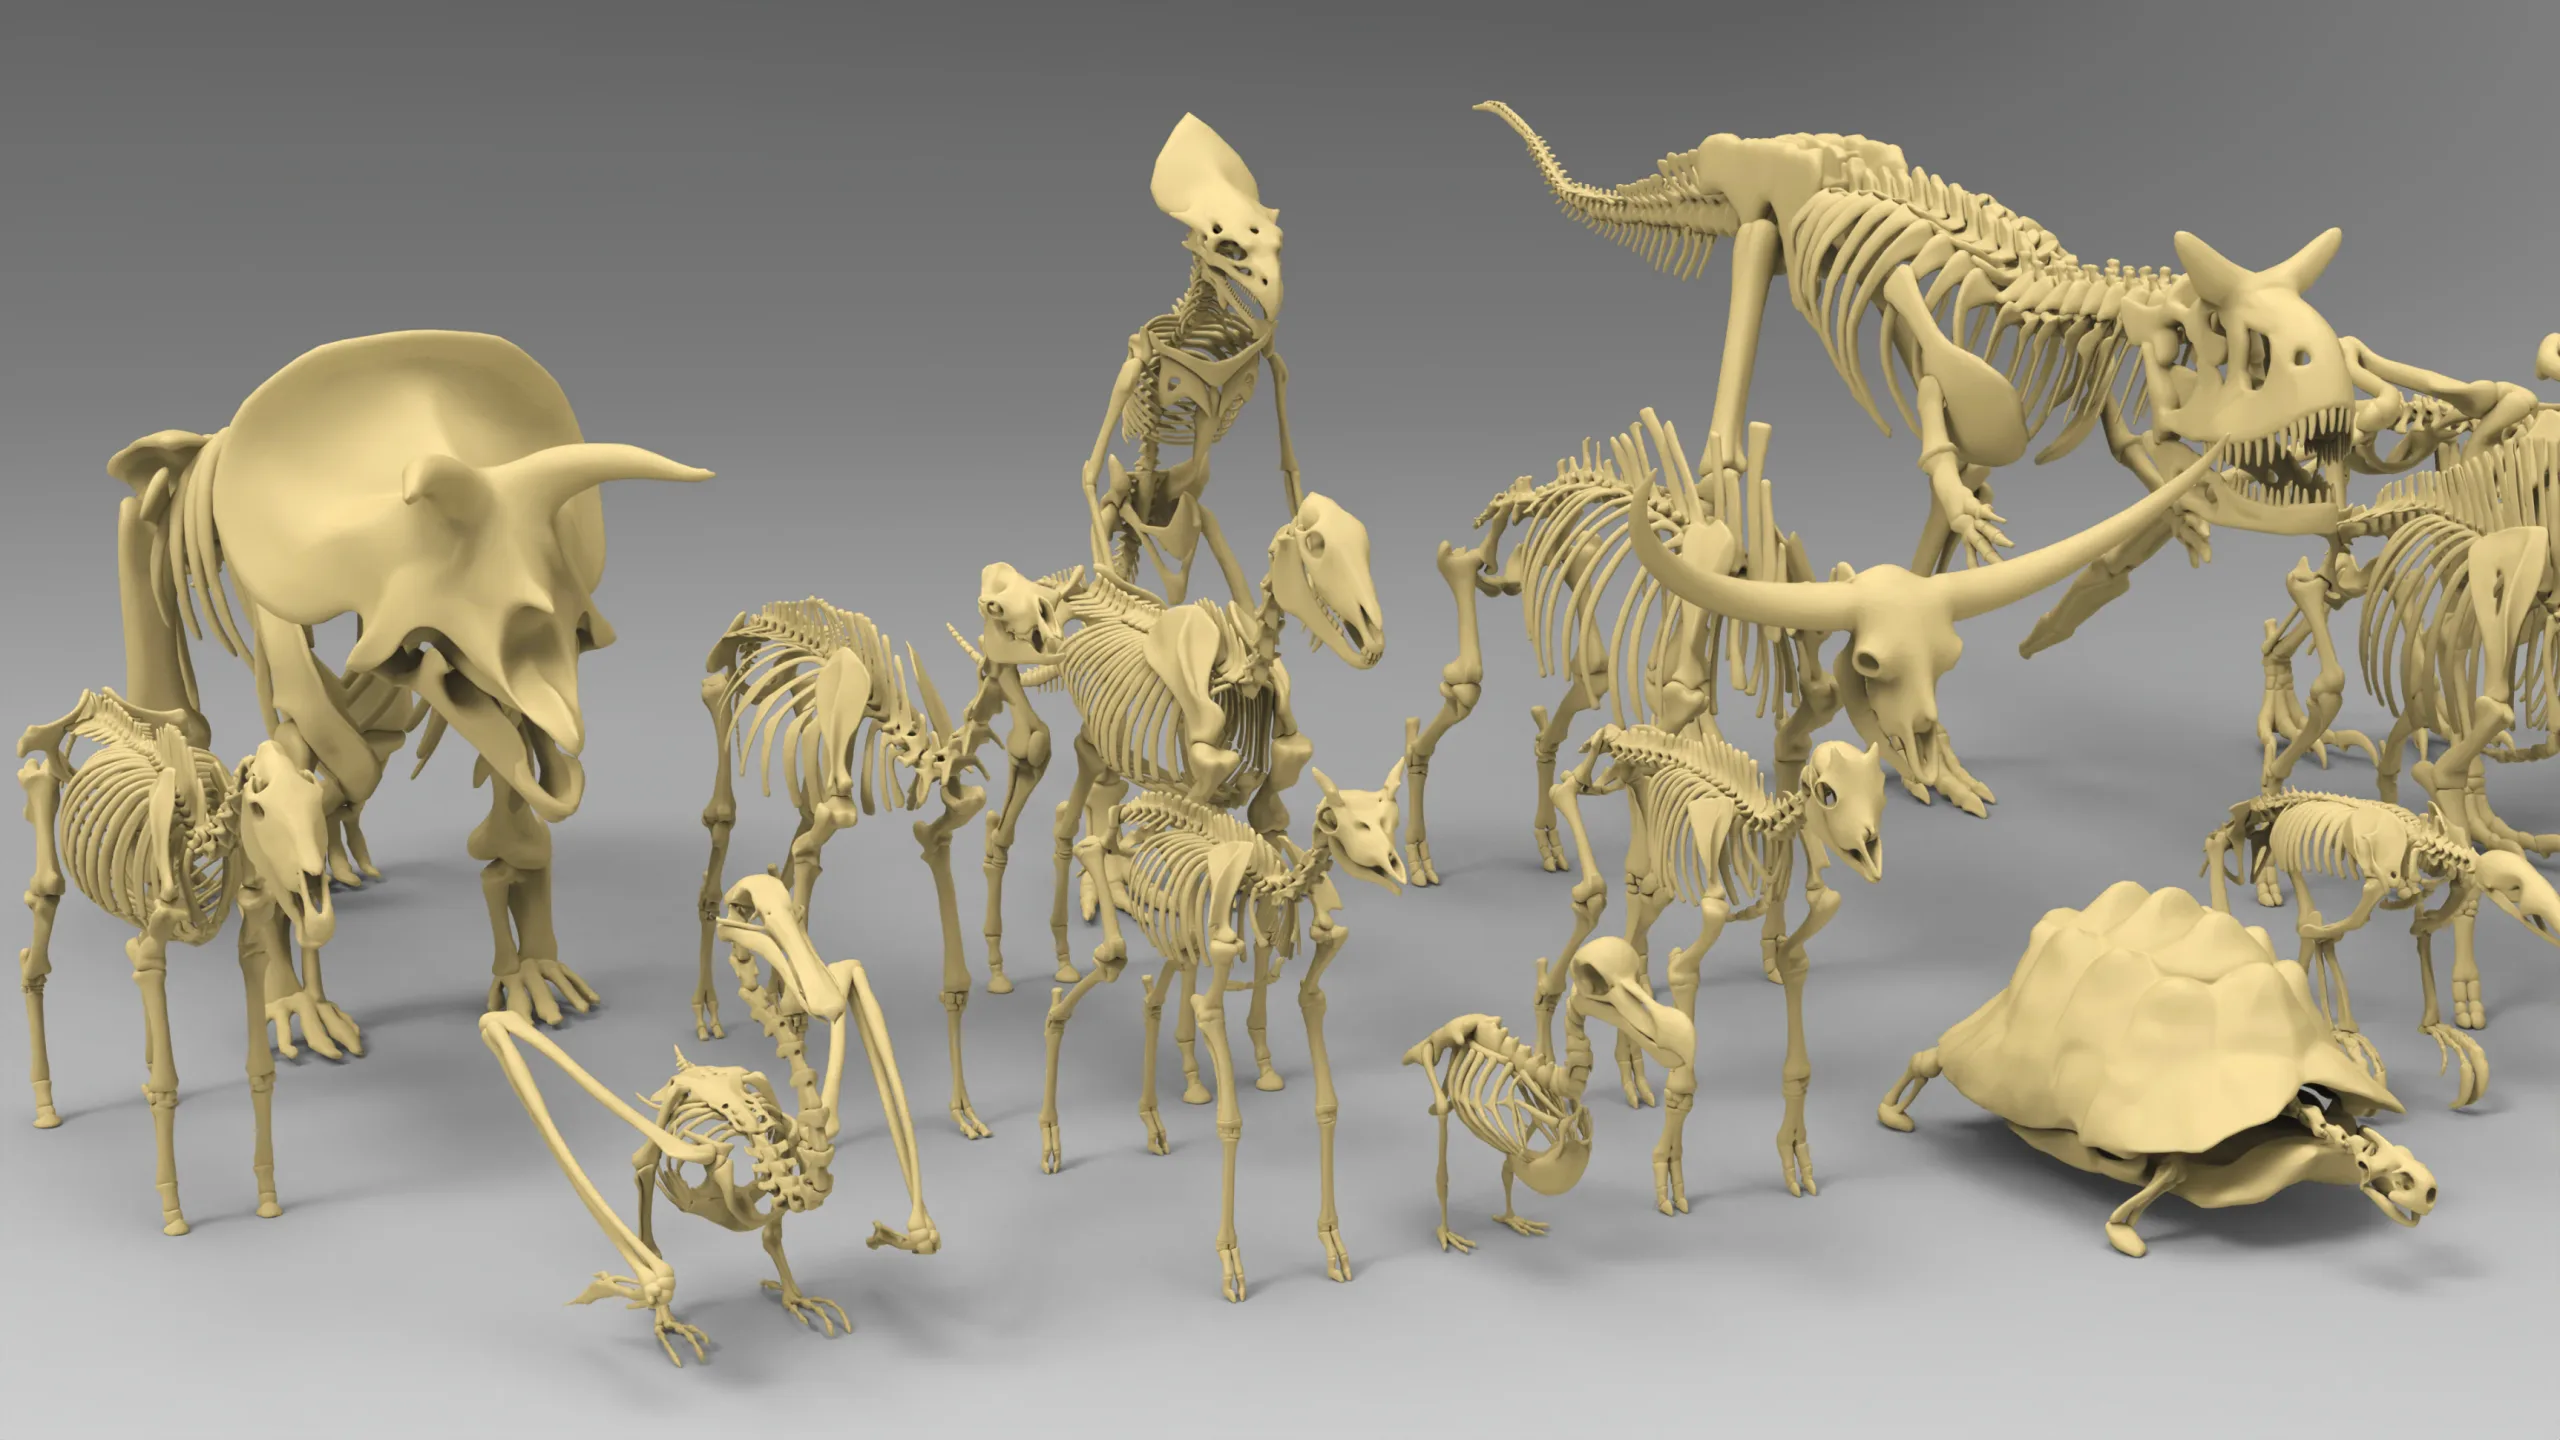 25 basemesh skeleton collection